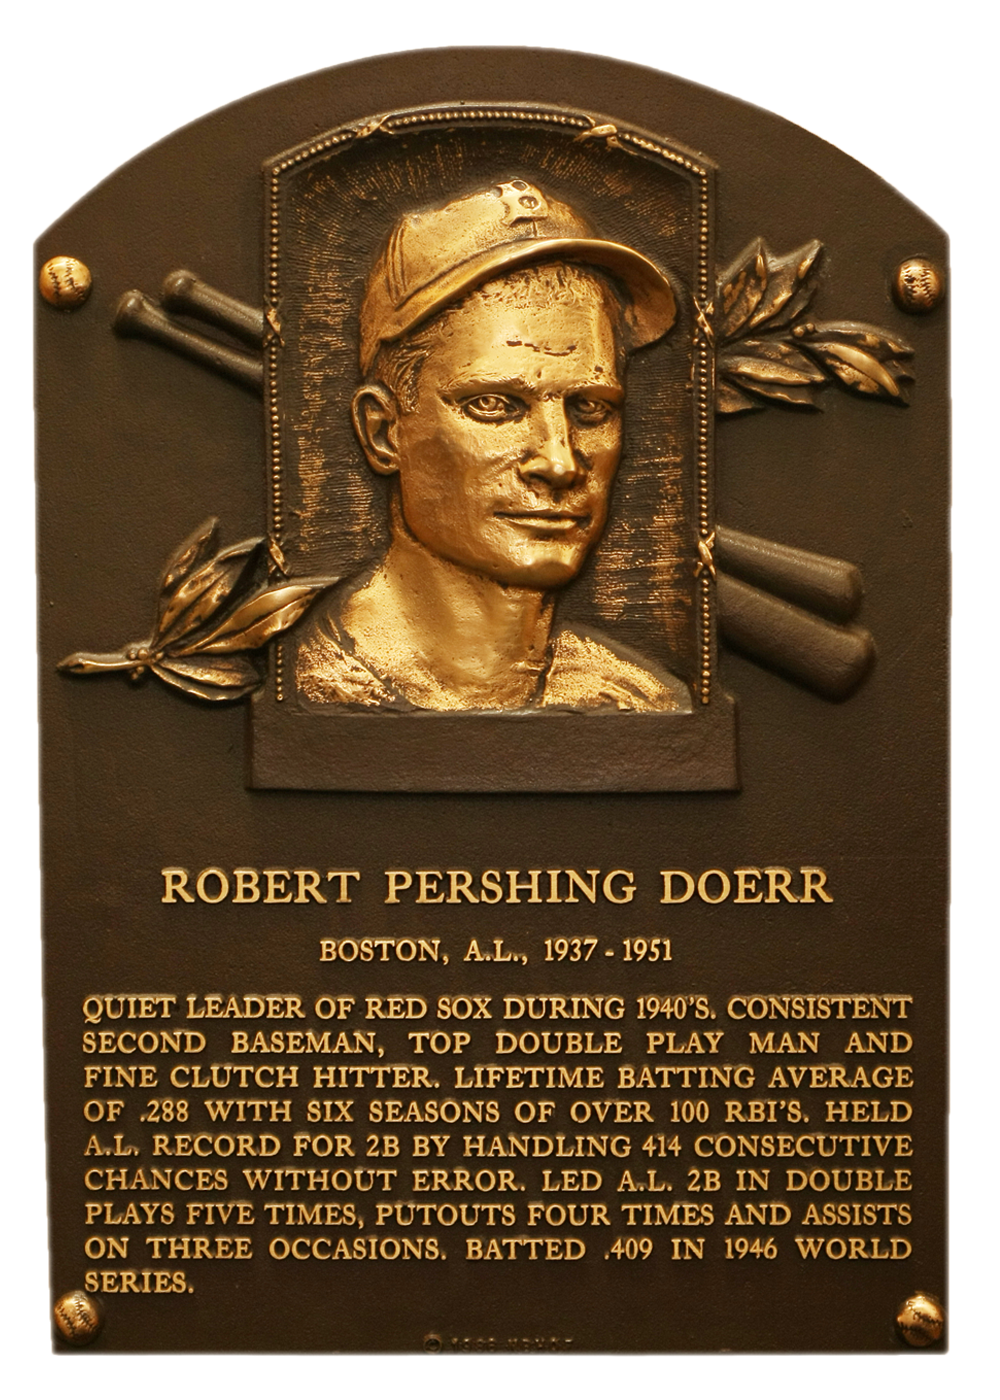 Bobby Doerr Hall of Fame plaque